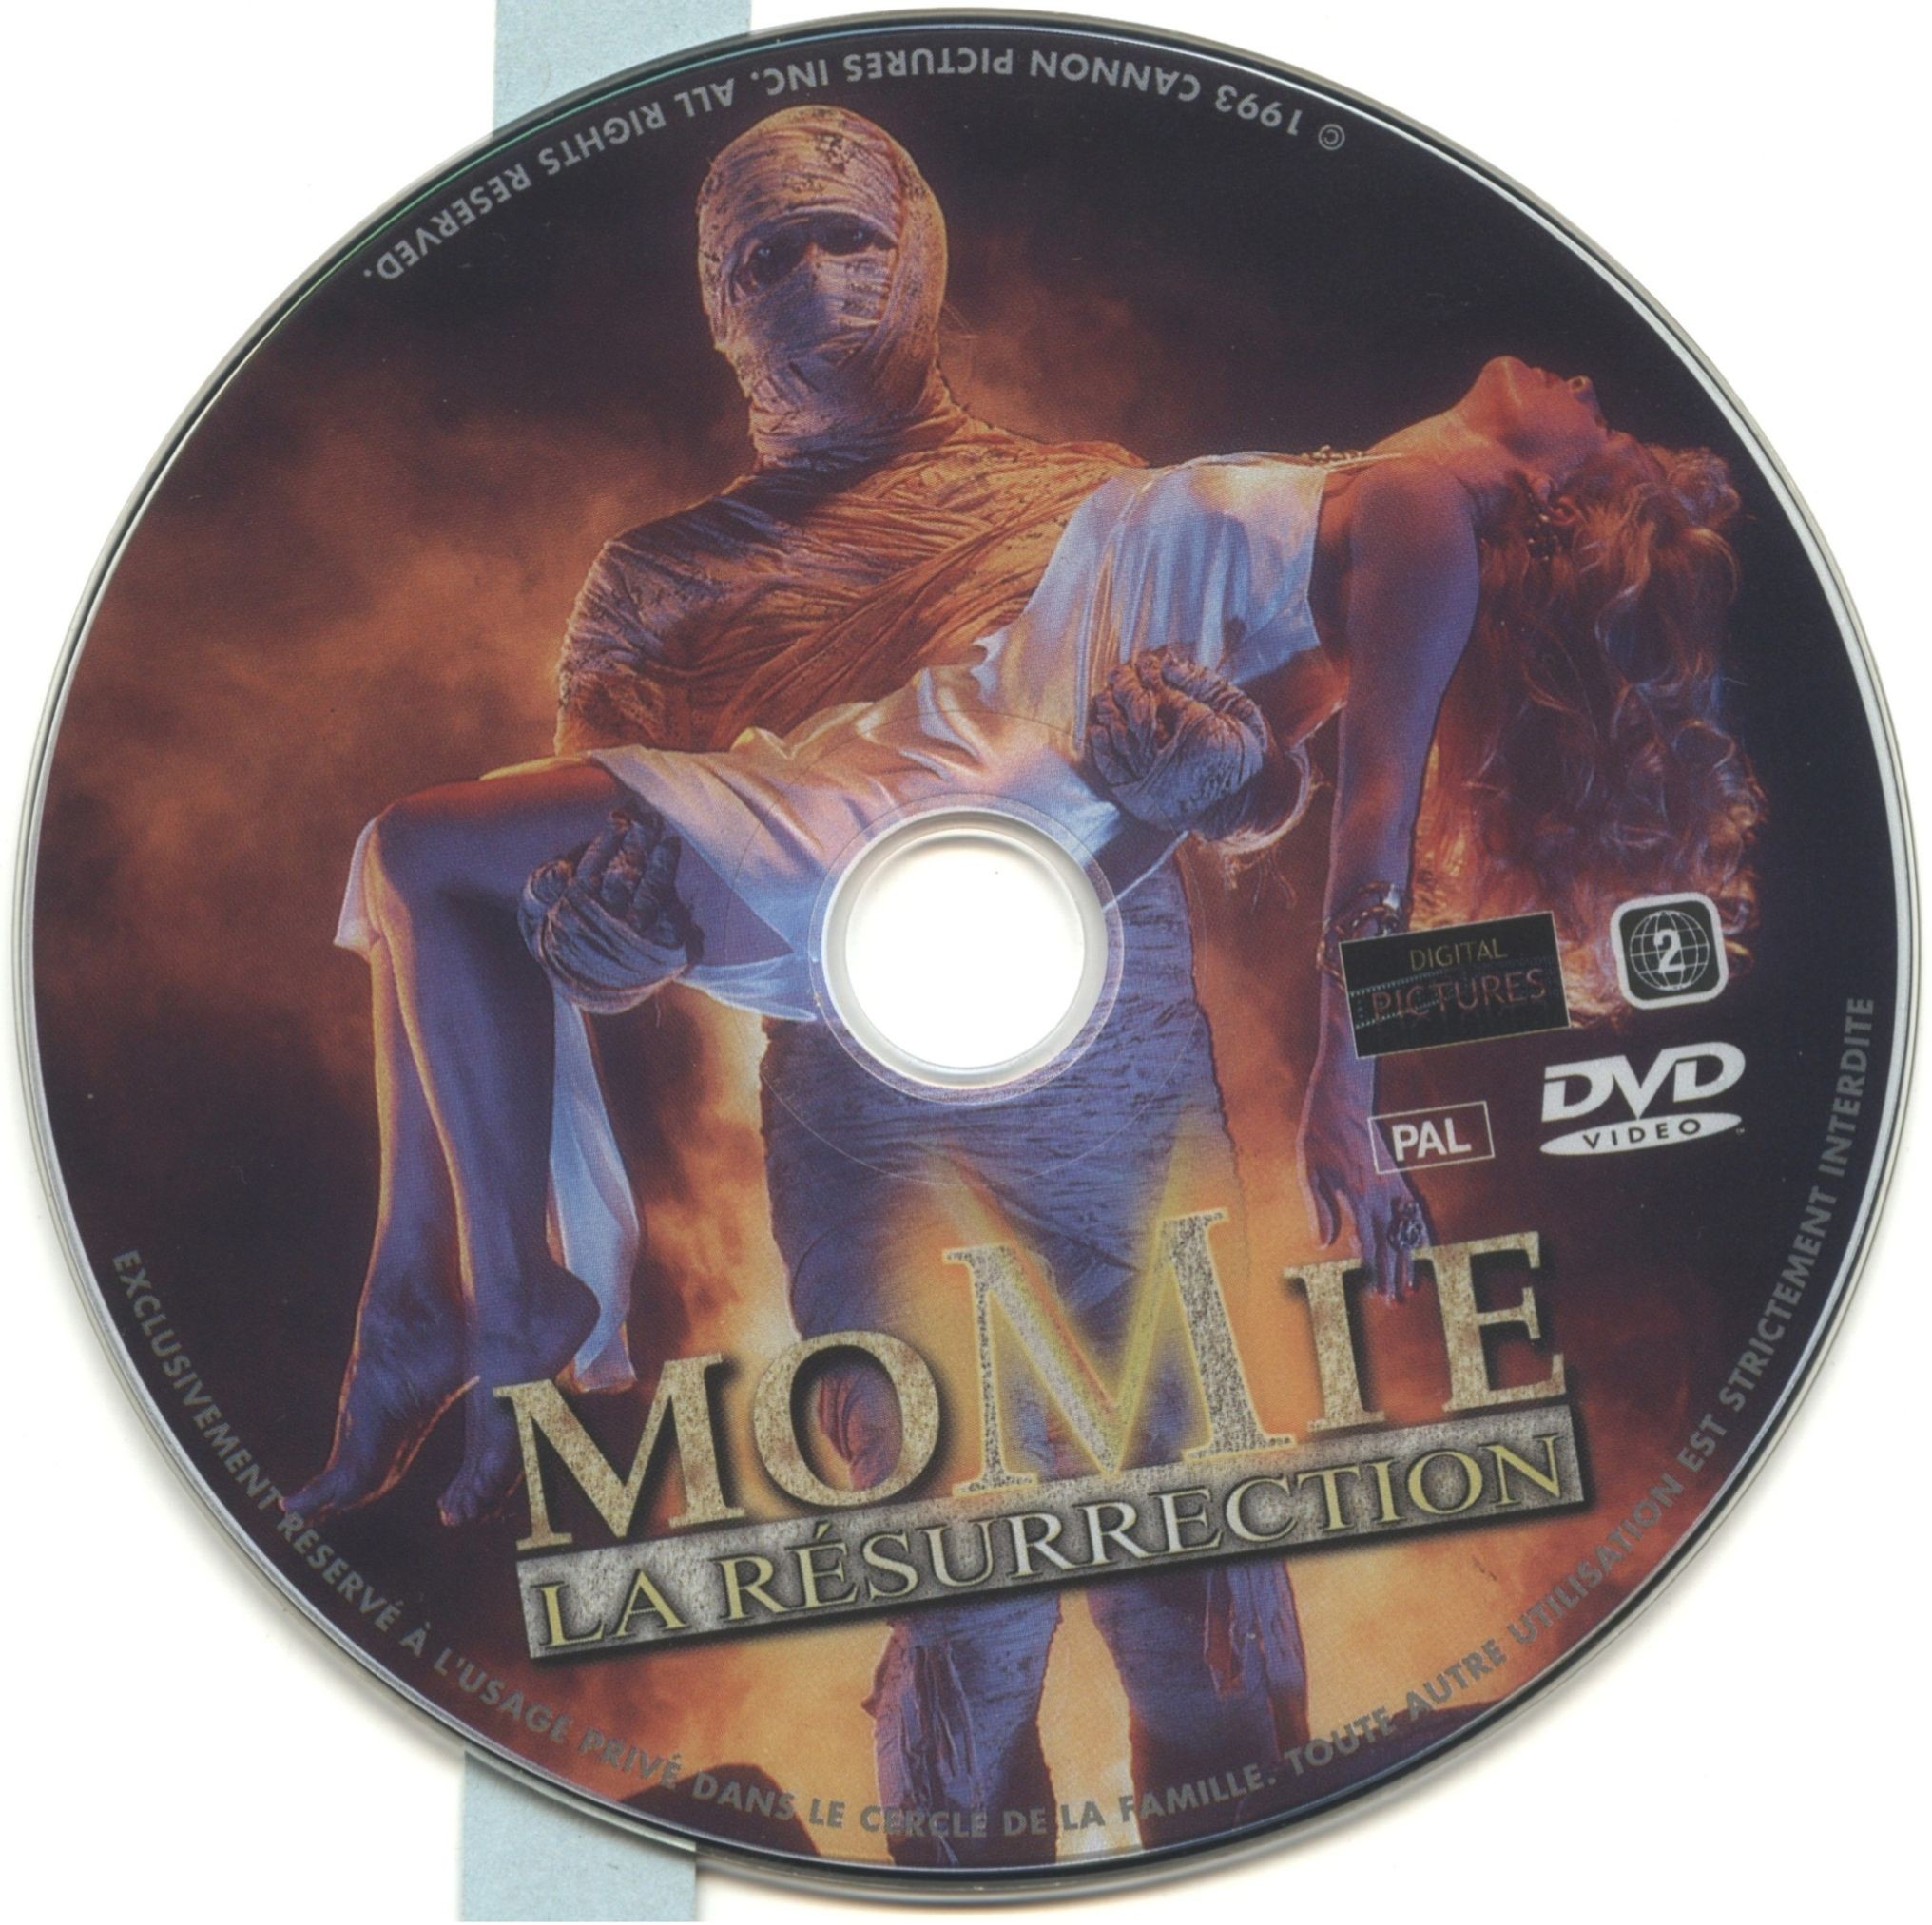 Momie la resurrection